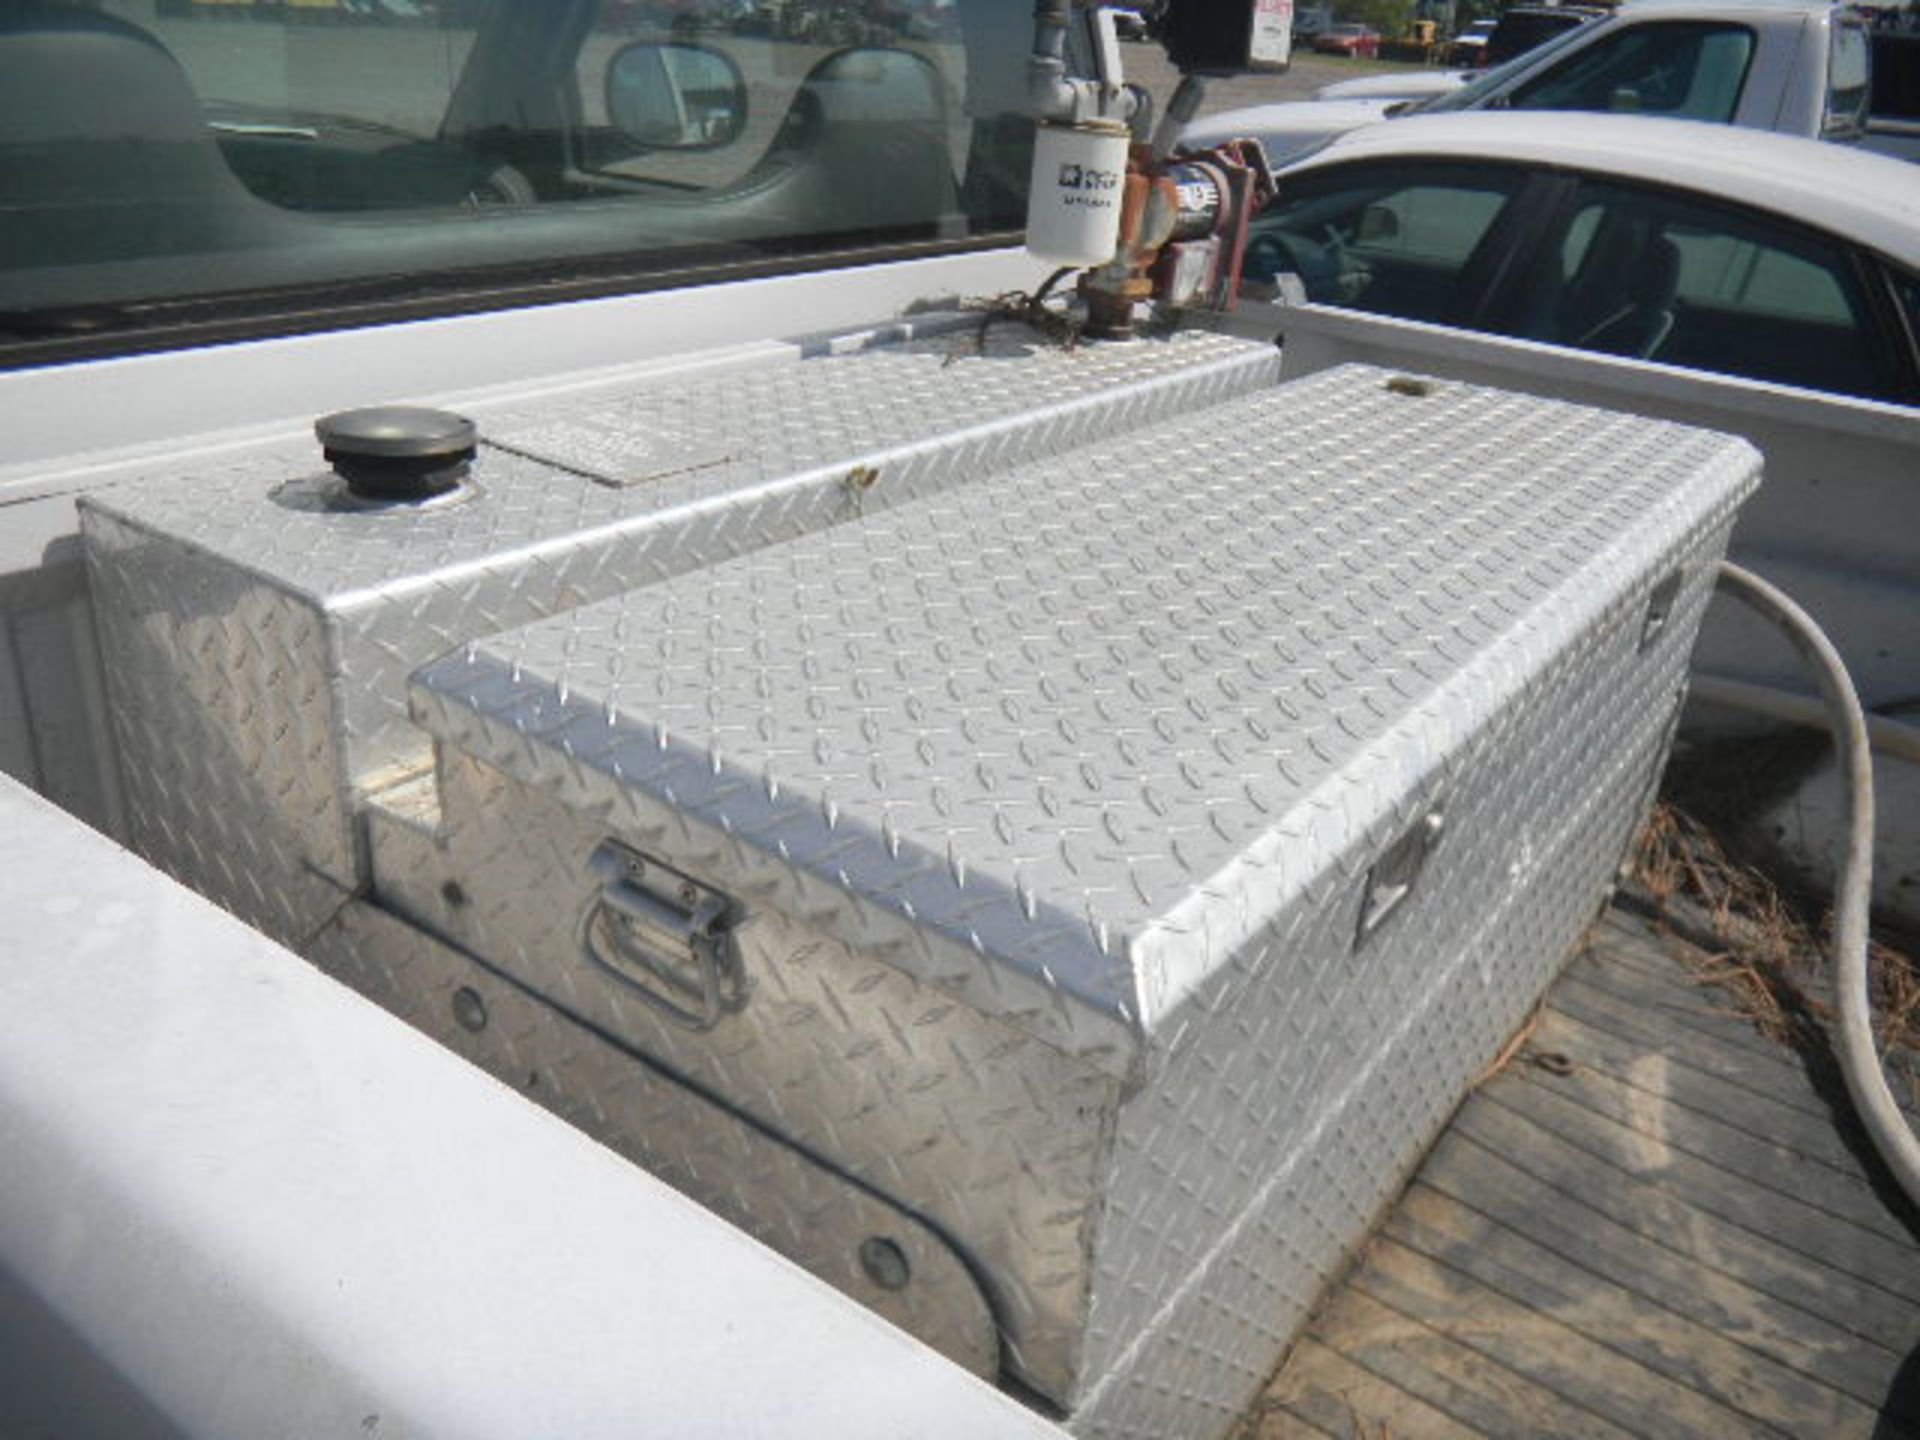 2000 Dodge Ram 2500 White Pickup w/Diamond Plate Fuel Tanks - Asset I.D.#482 - Last of Vin (276108) - Image 4 of 9